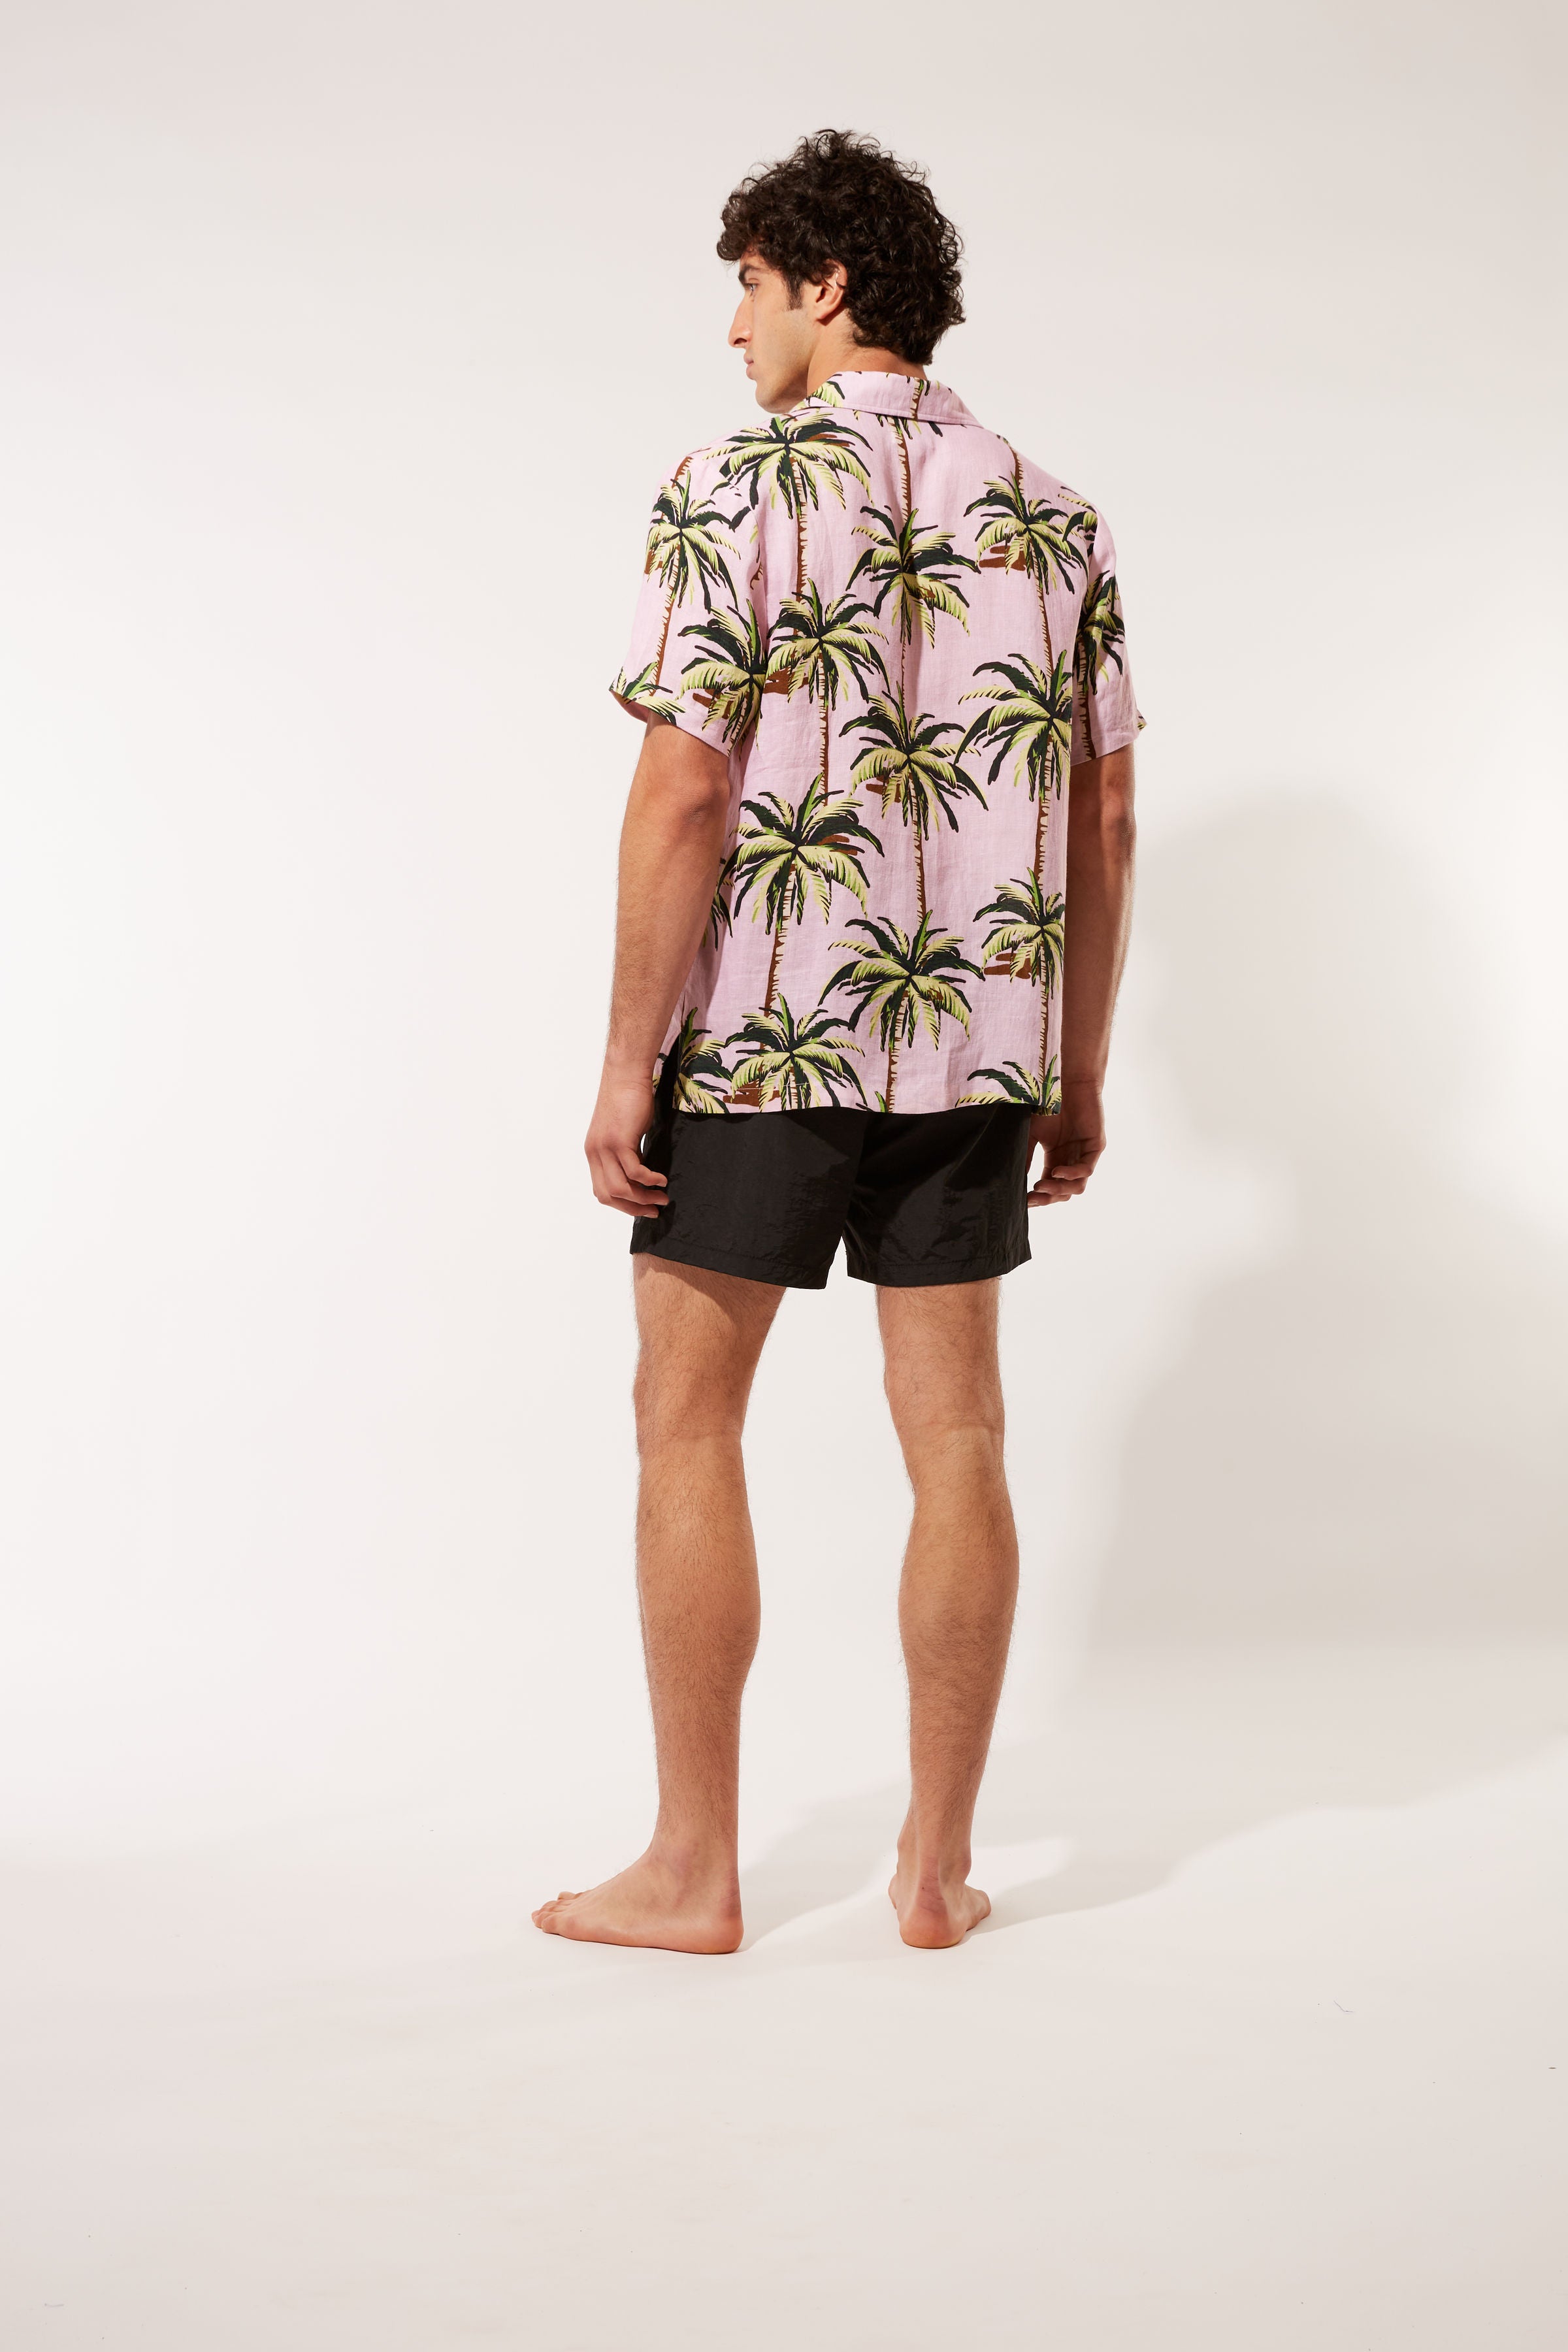 The Cabana Shirt Palm Tree Print